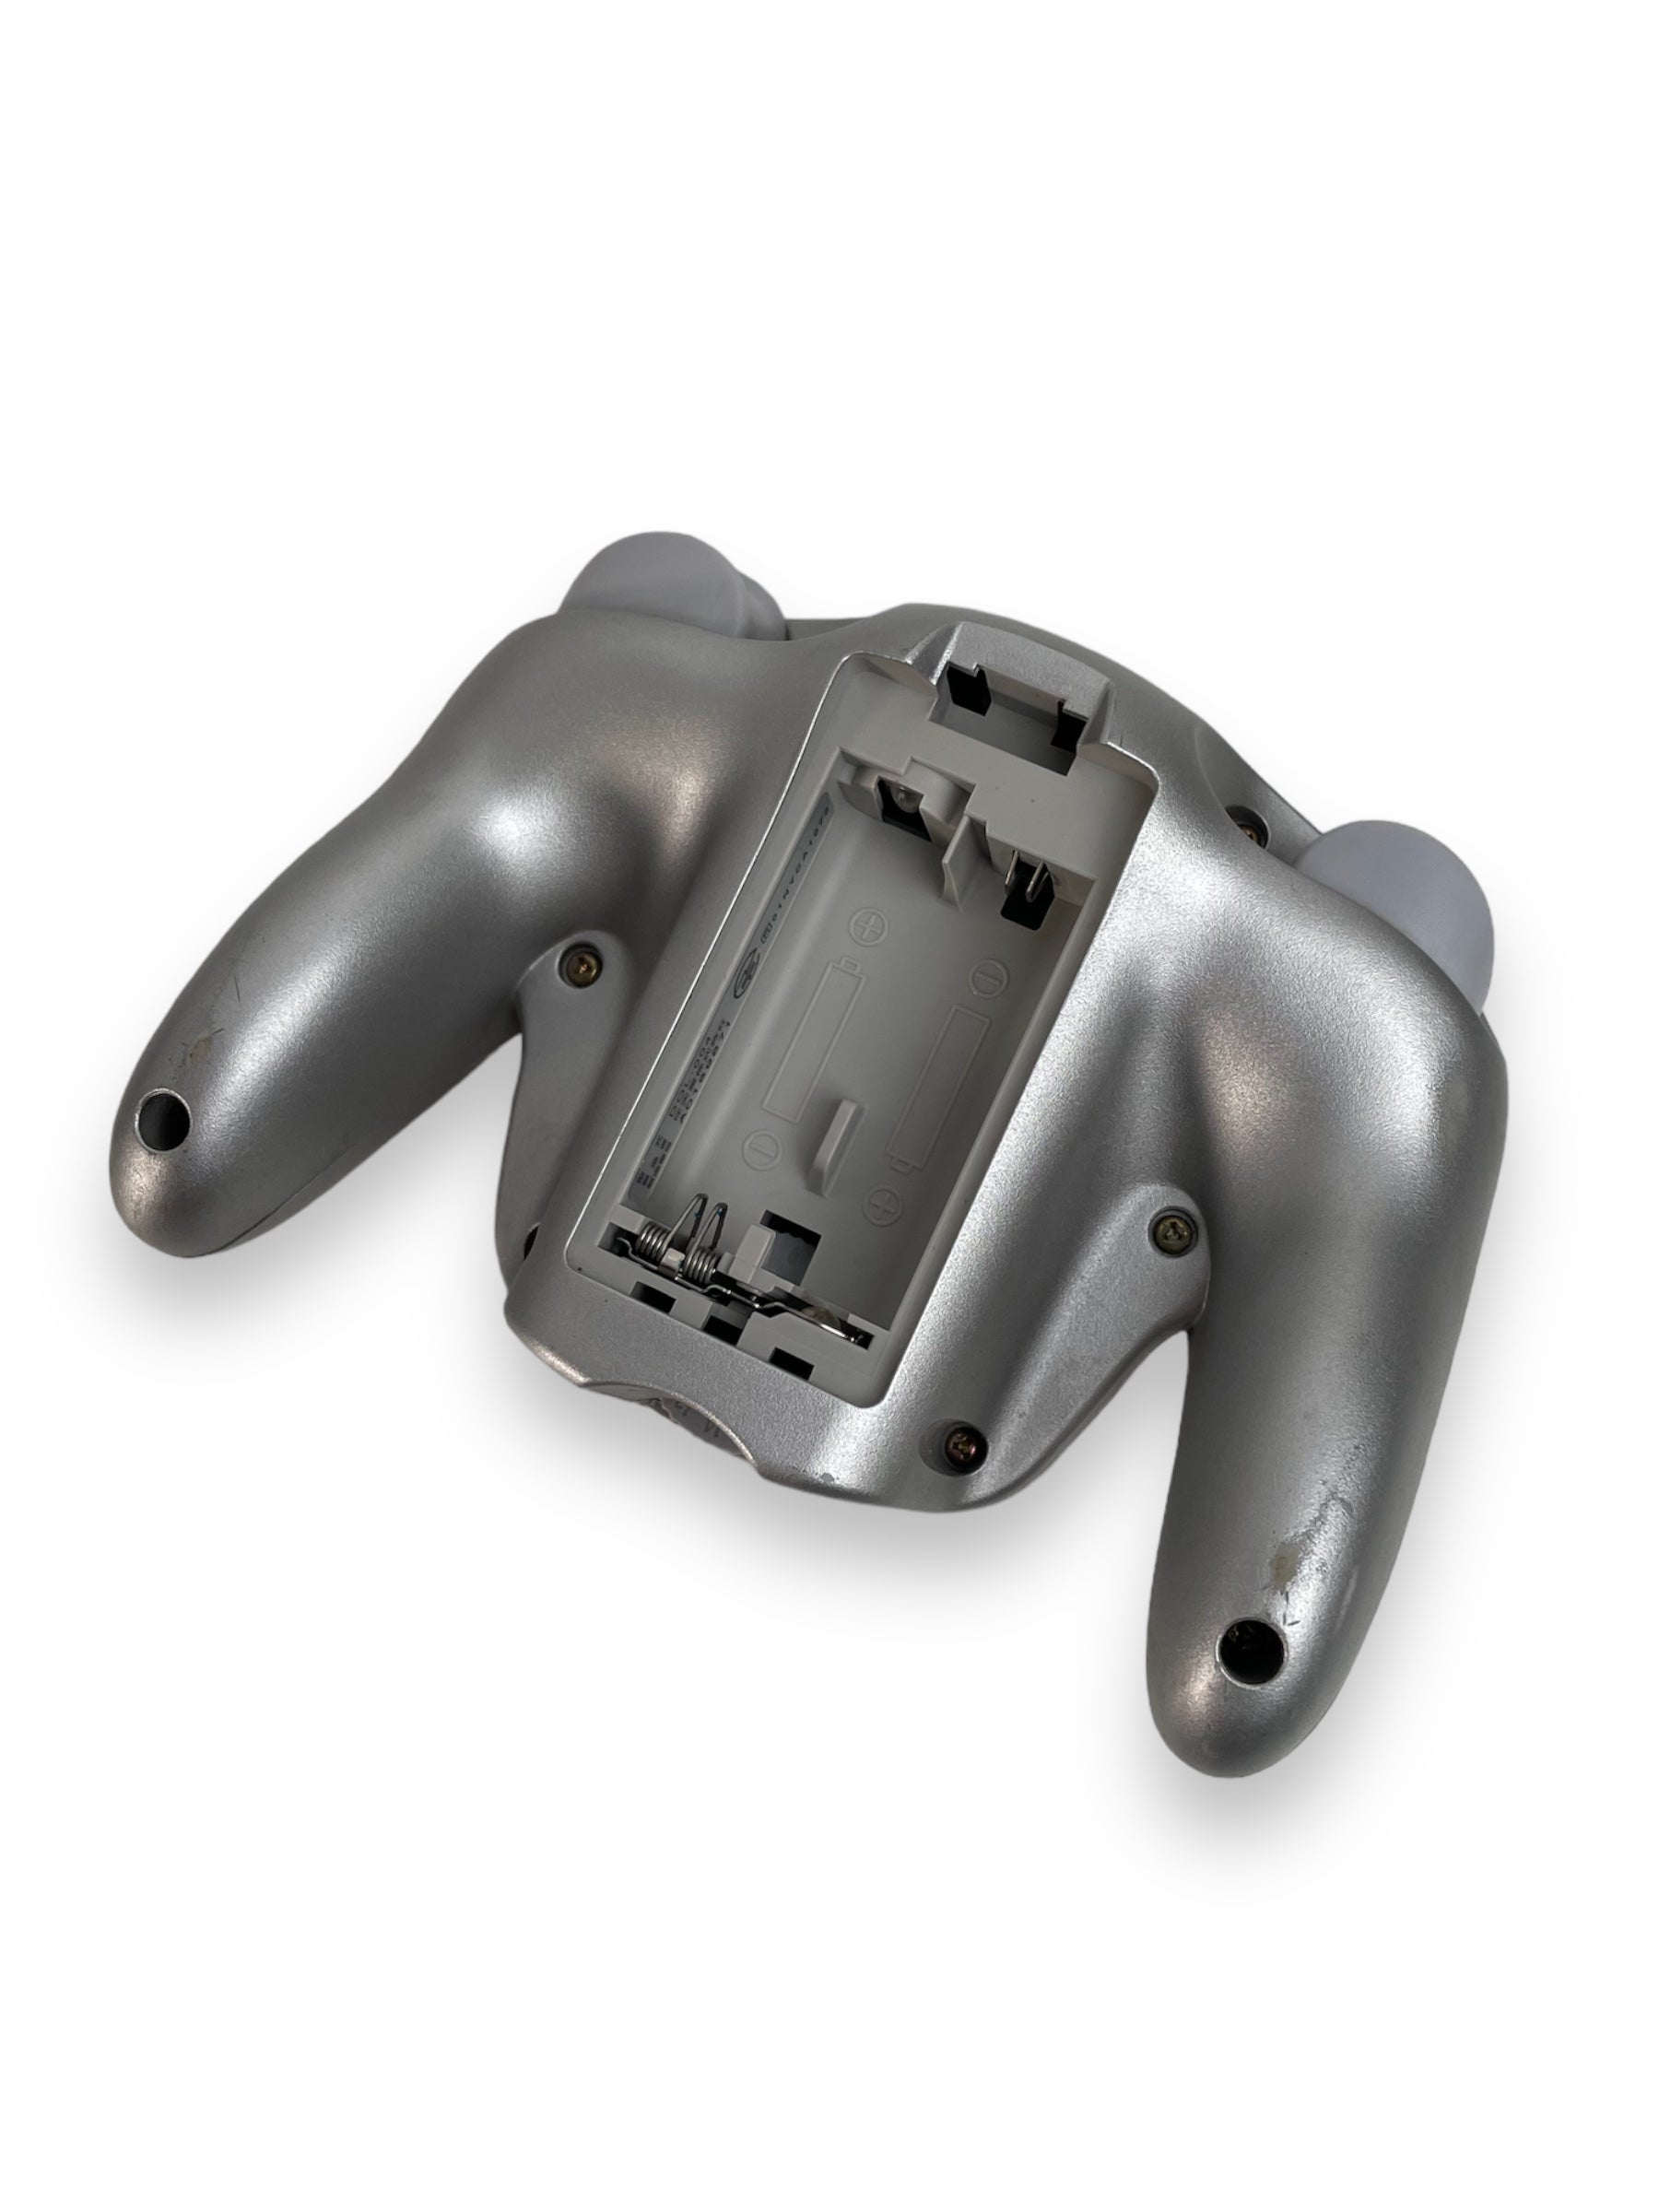 Manette sans fil Nintendo GameCube Wavebird en finition platine argentée